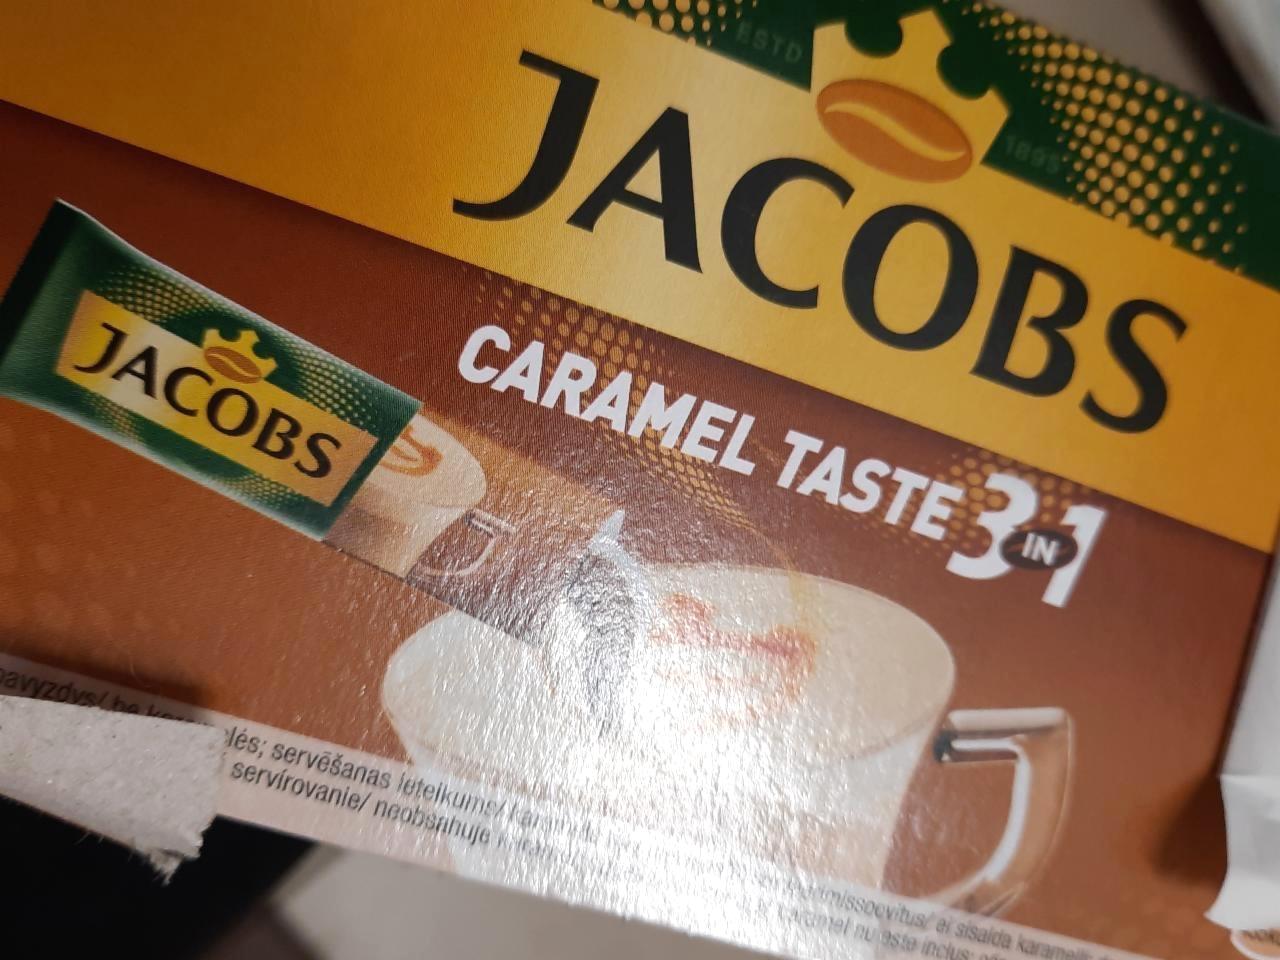 Képek - Caramel taste 3in1 Jacobs